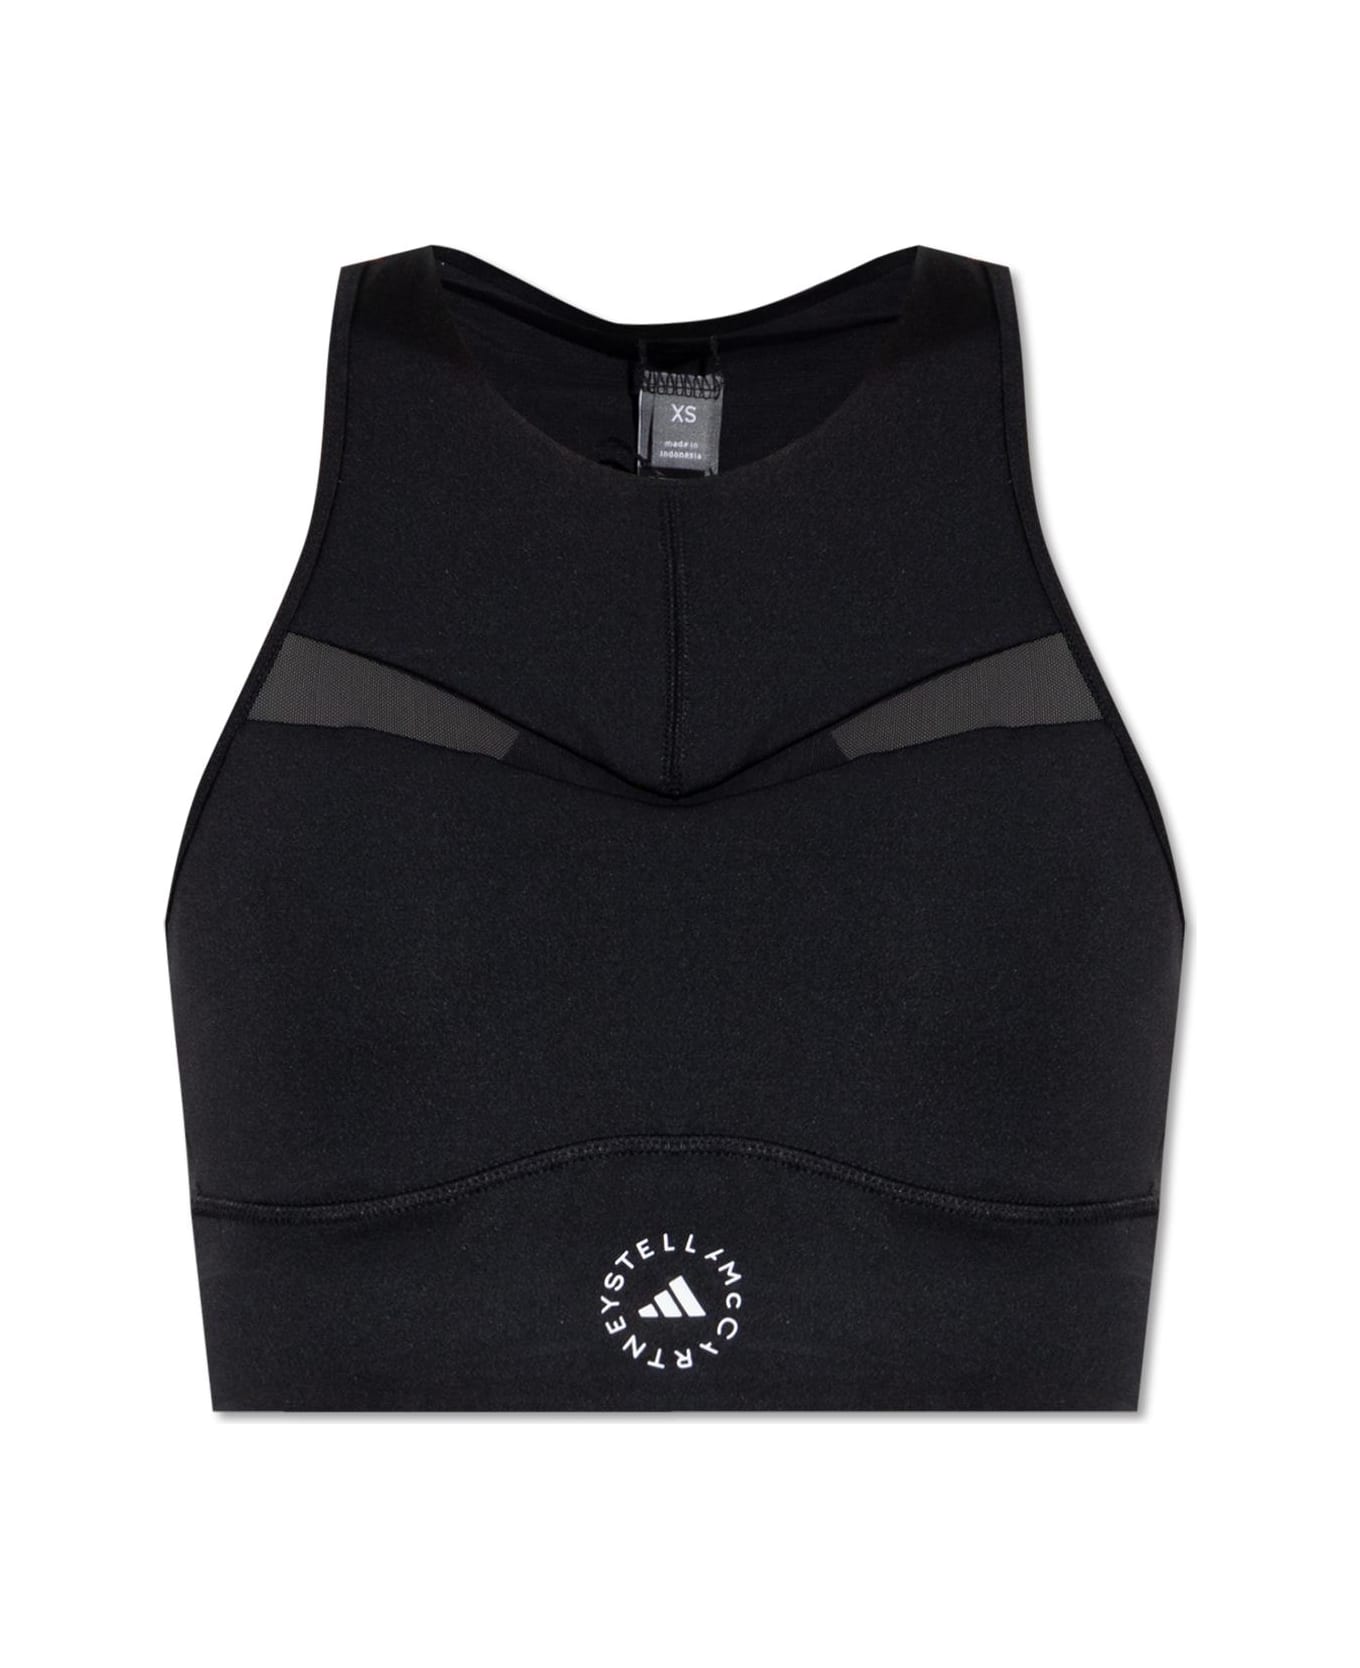 Adidas by Stella McCartney Truepurpose Training Bra - BLACK